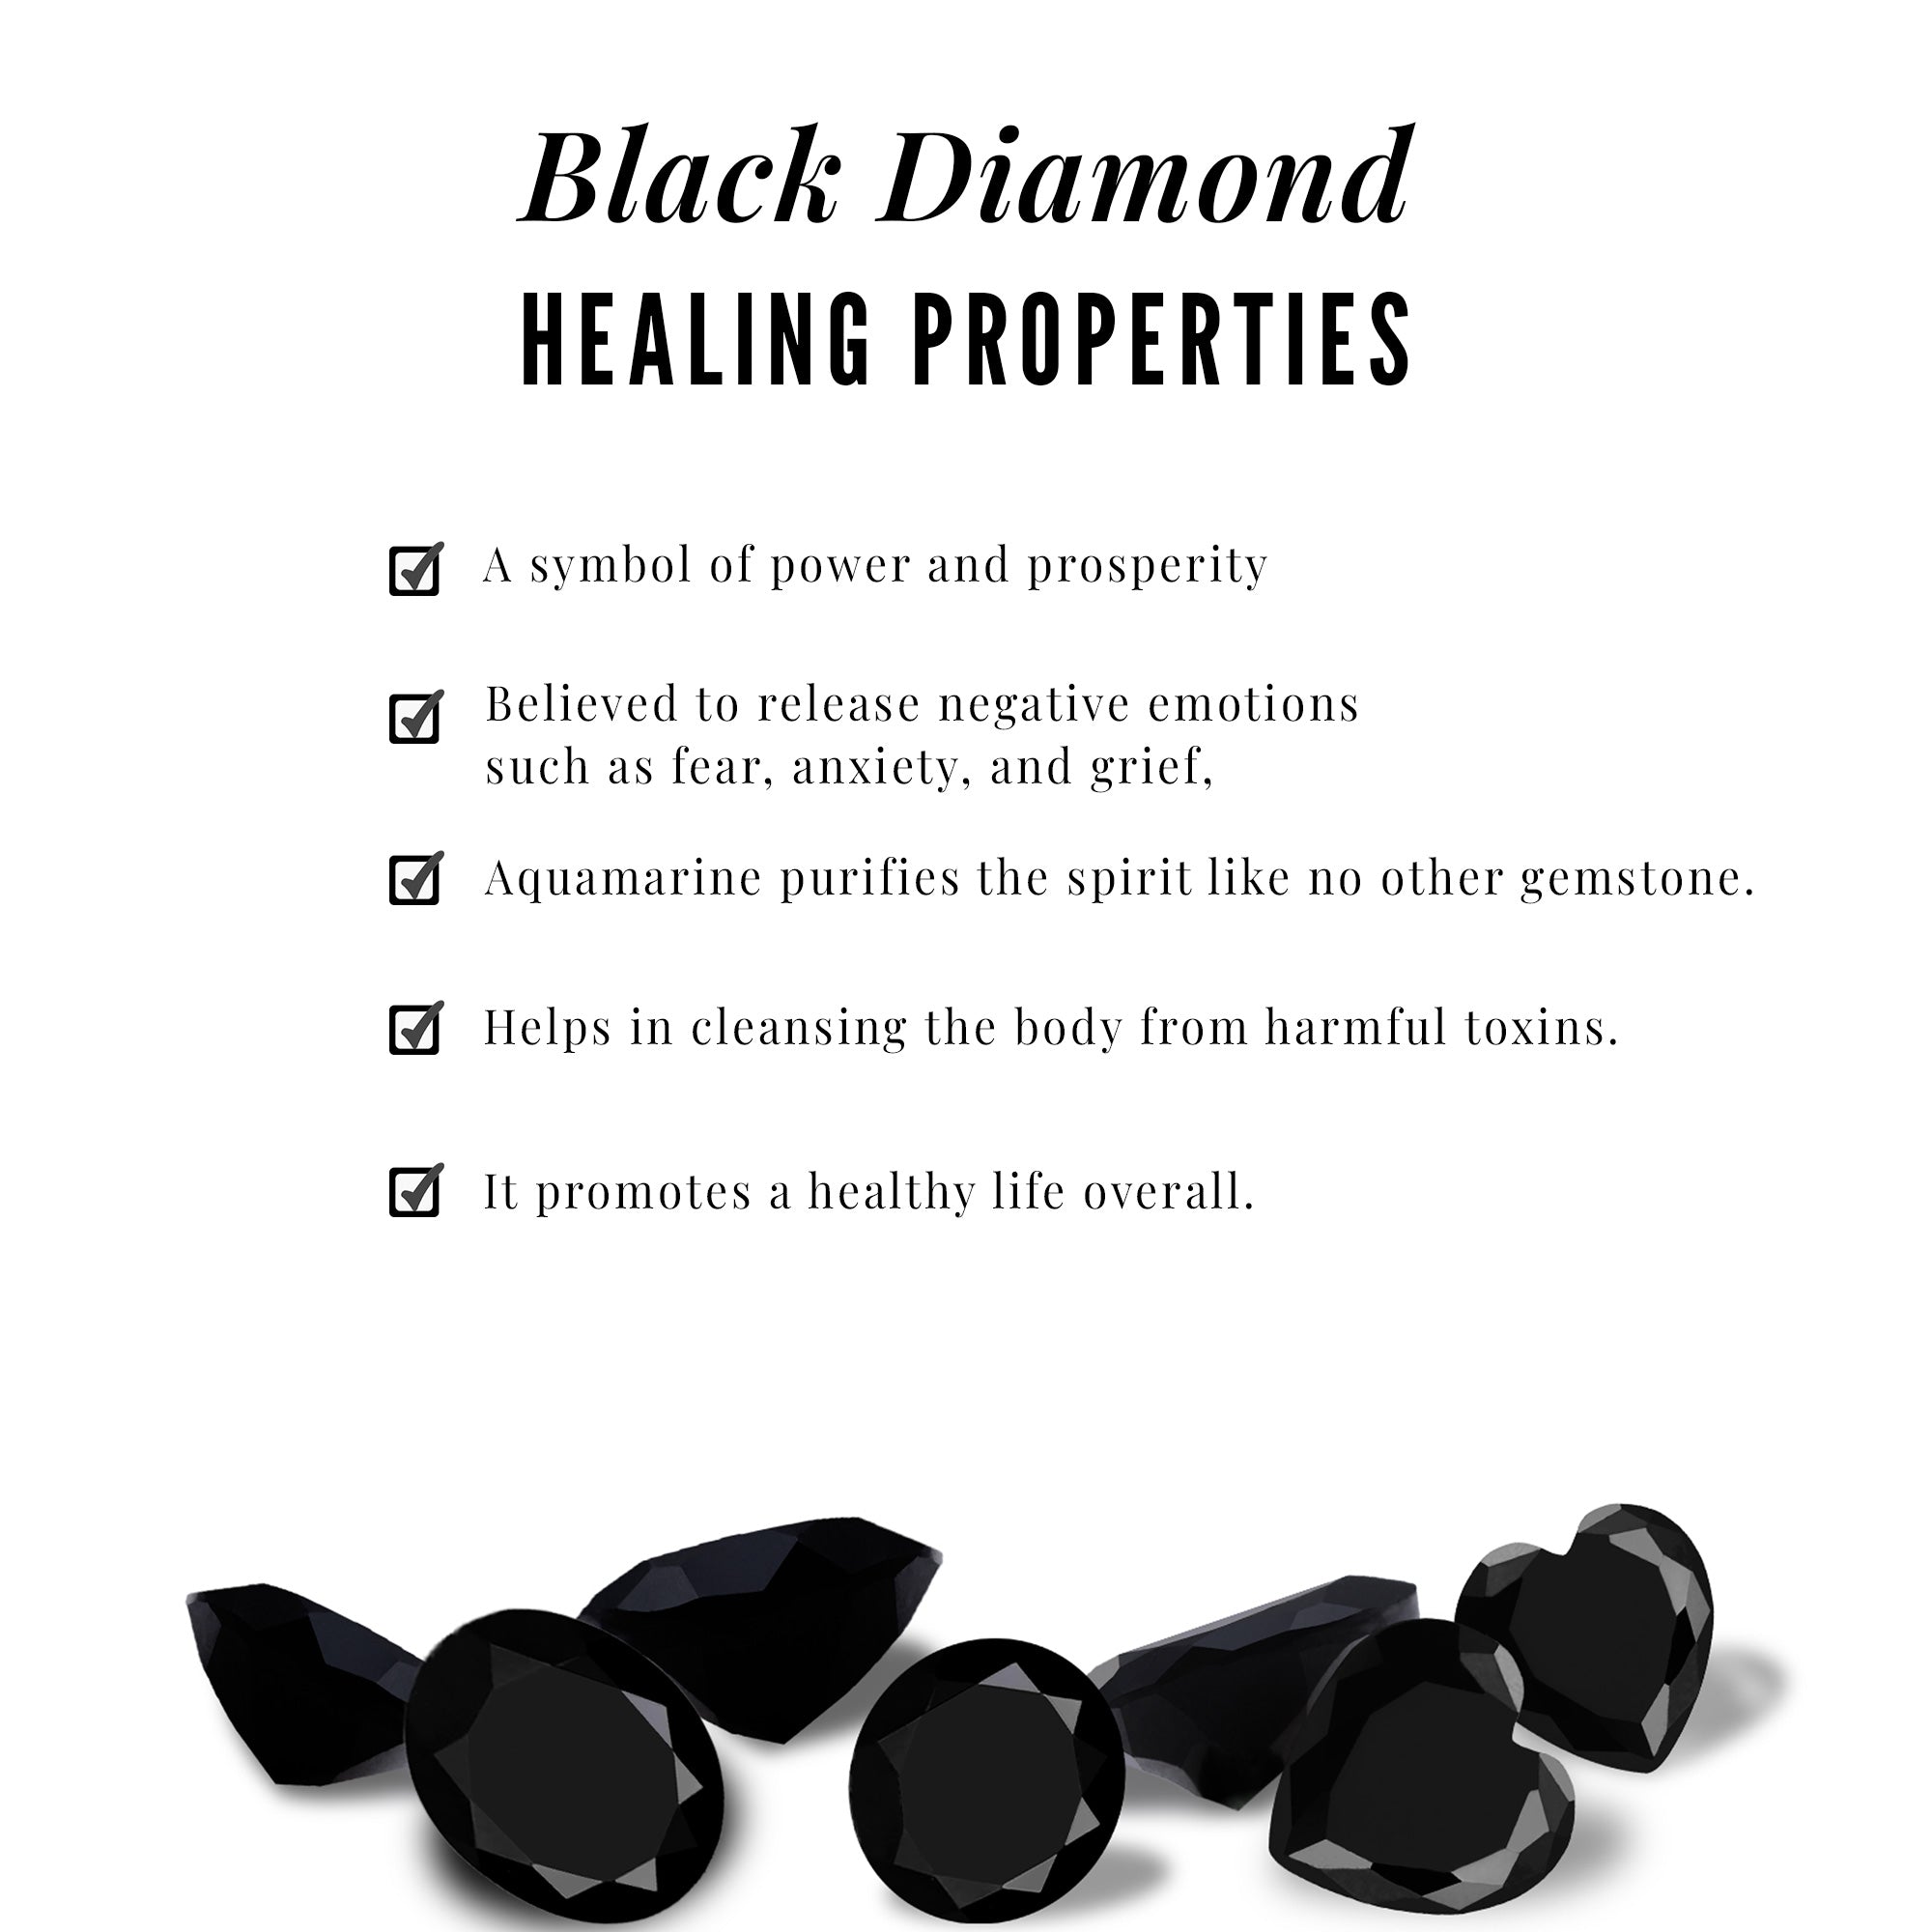 Black and White Diamond Heart Drop Earrings Black Diamond - ( AAA ) - Quality - Rosec Jewels